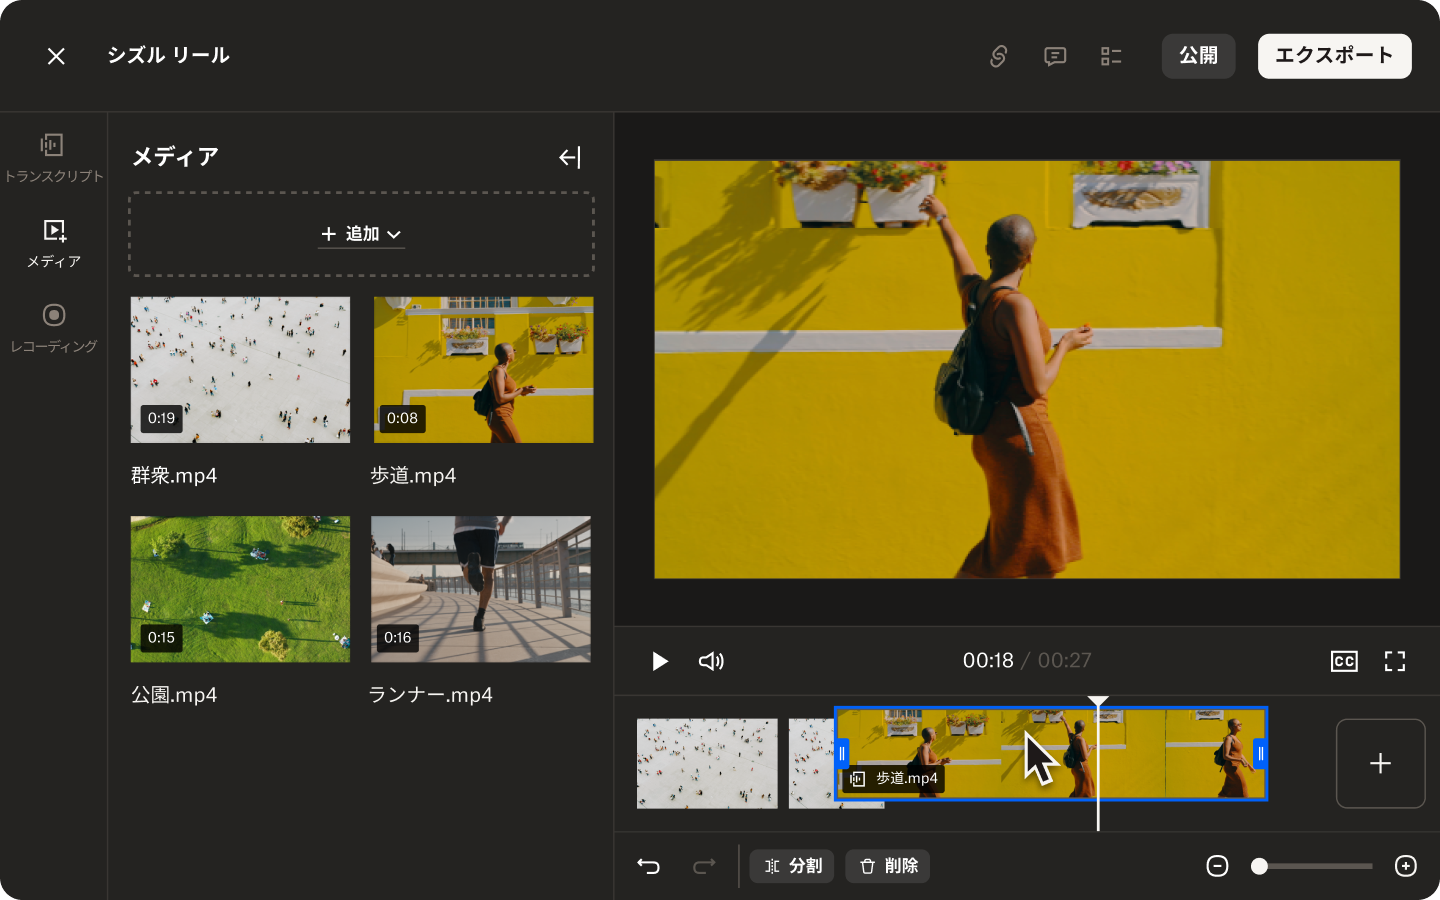 Dropbox Studio はユーザー間で動画プロジェクトの共同作業が可能